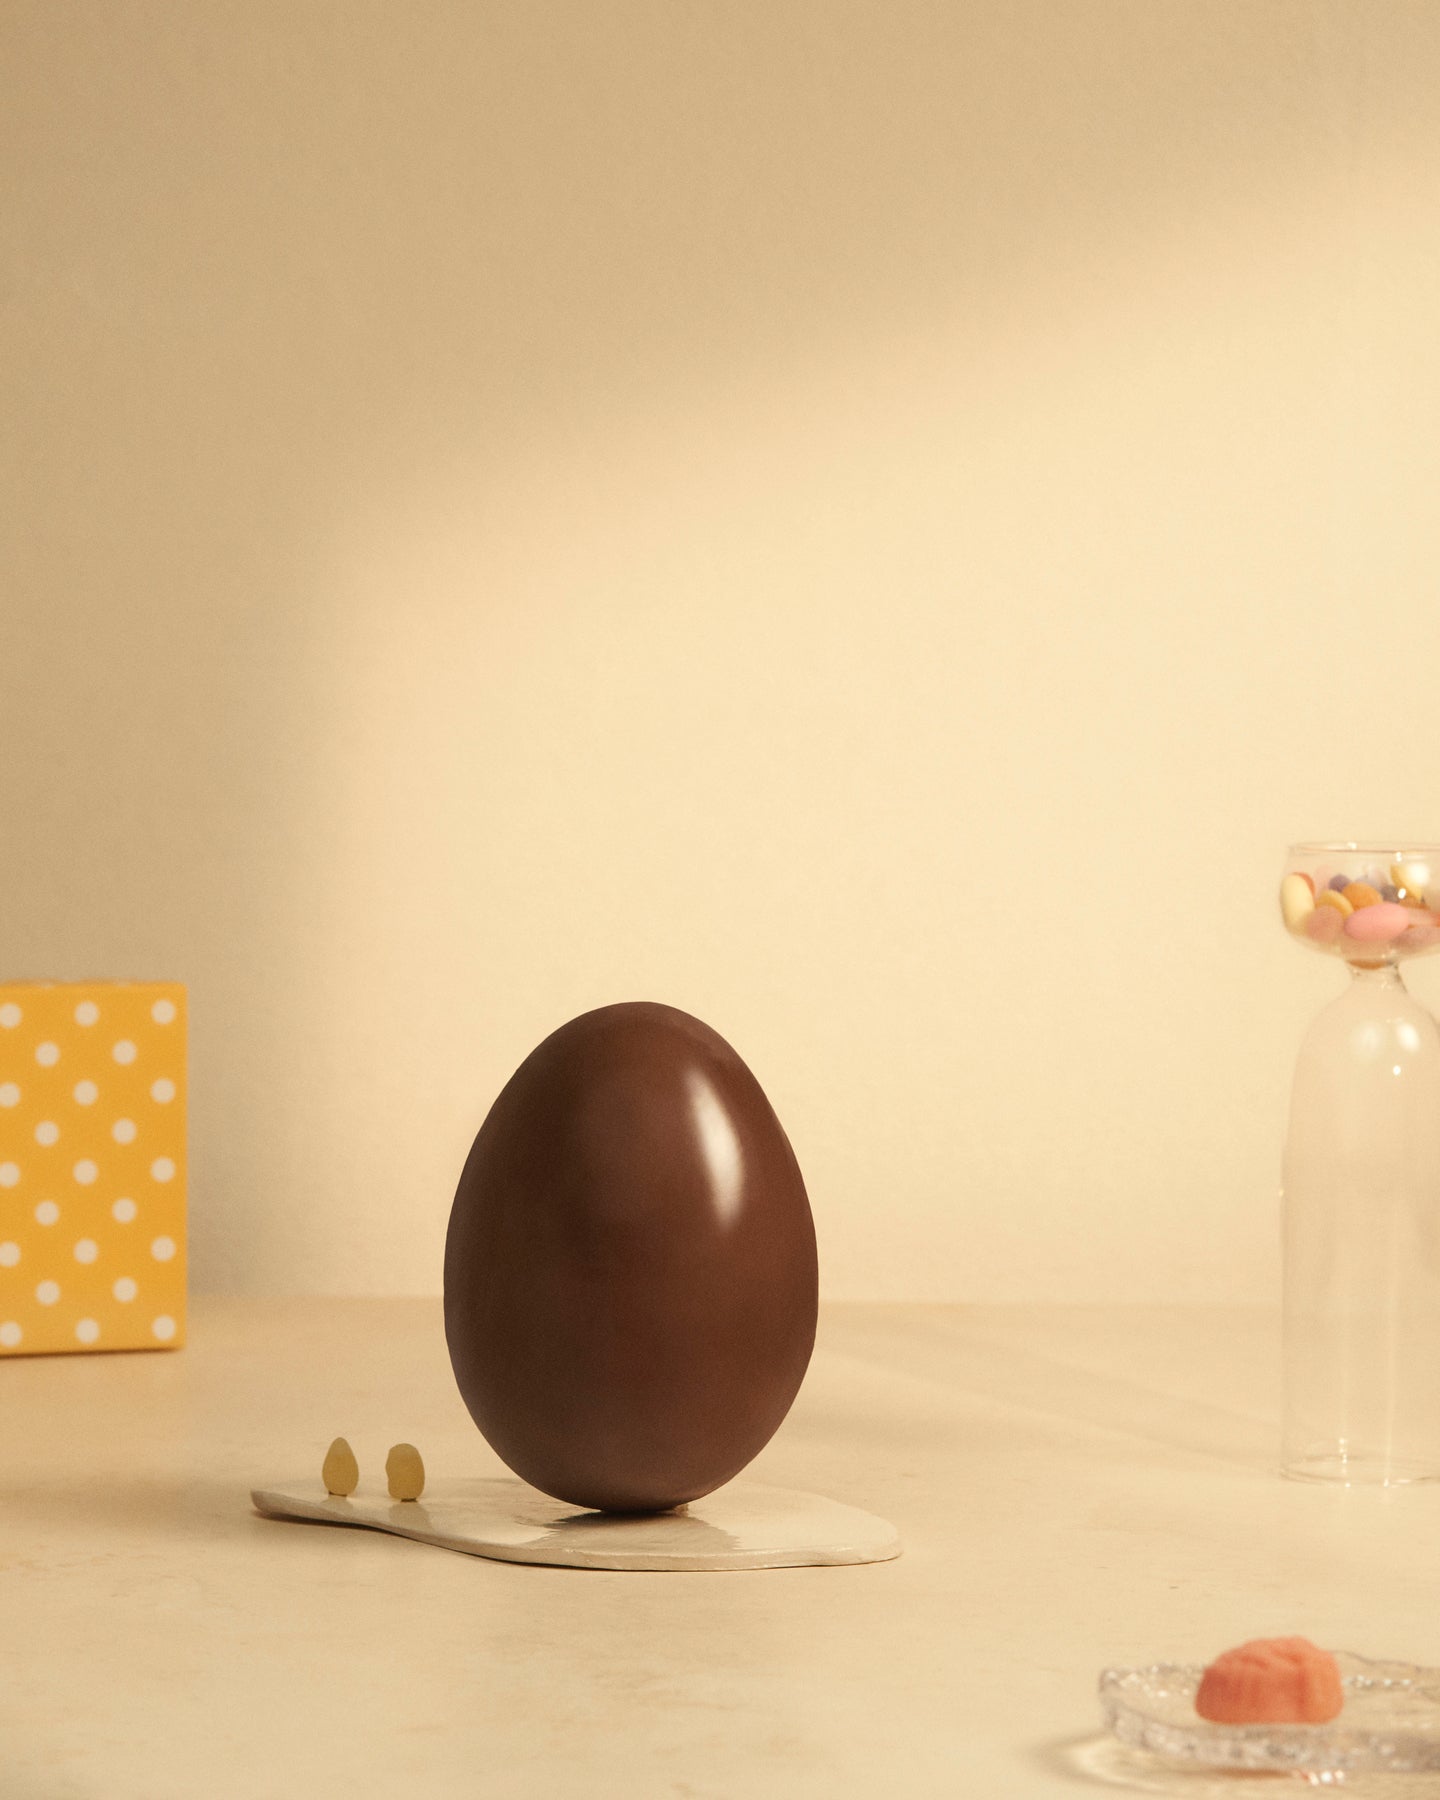 Dark Chocolate Eggs 51% with Polka Dot Box